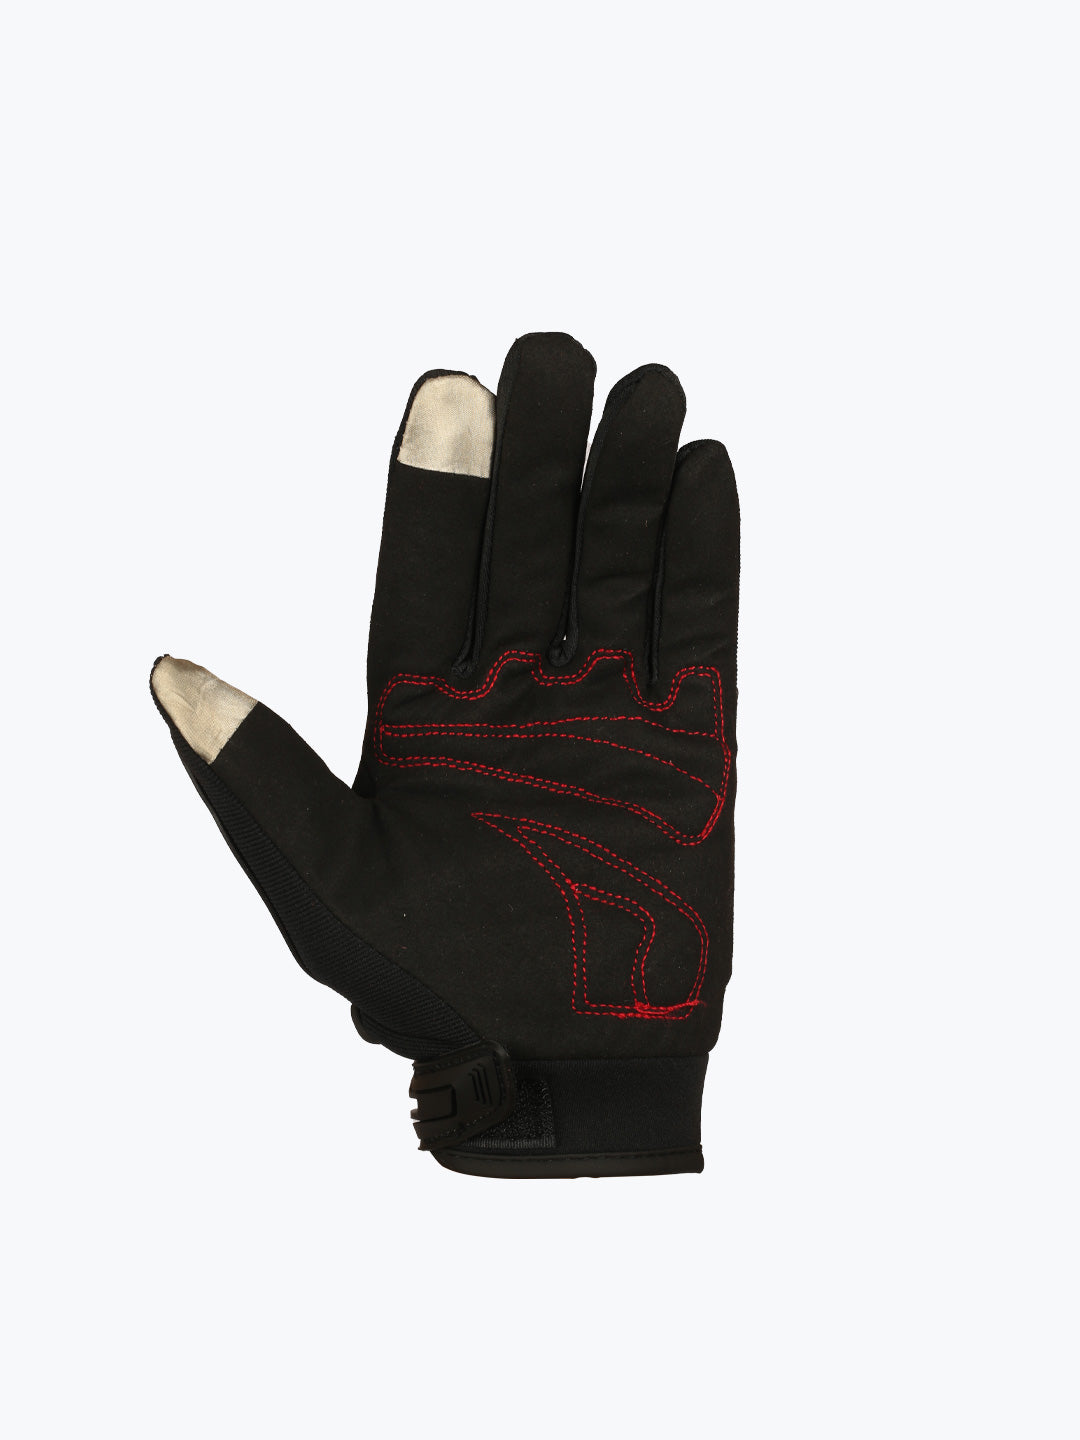 BSDDP Gloves A0135 Red